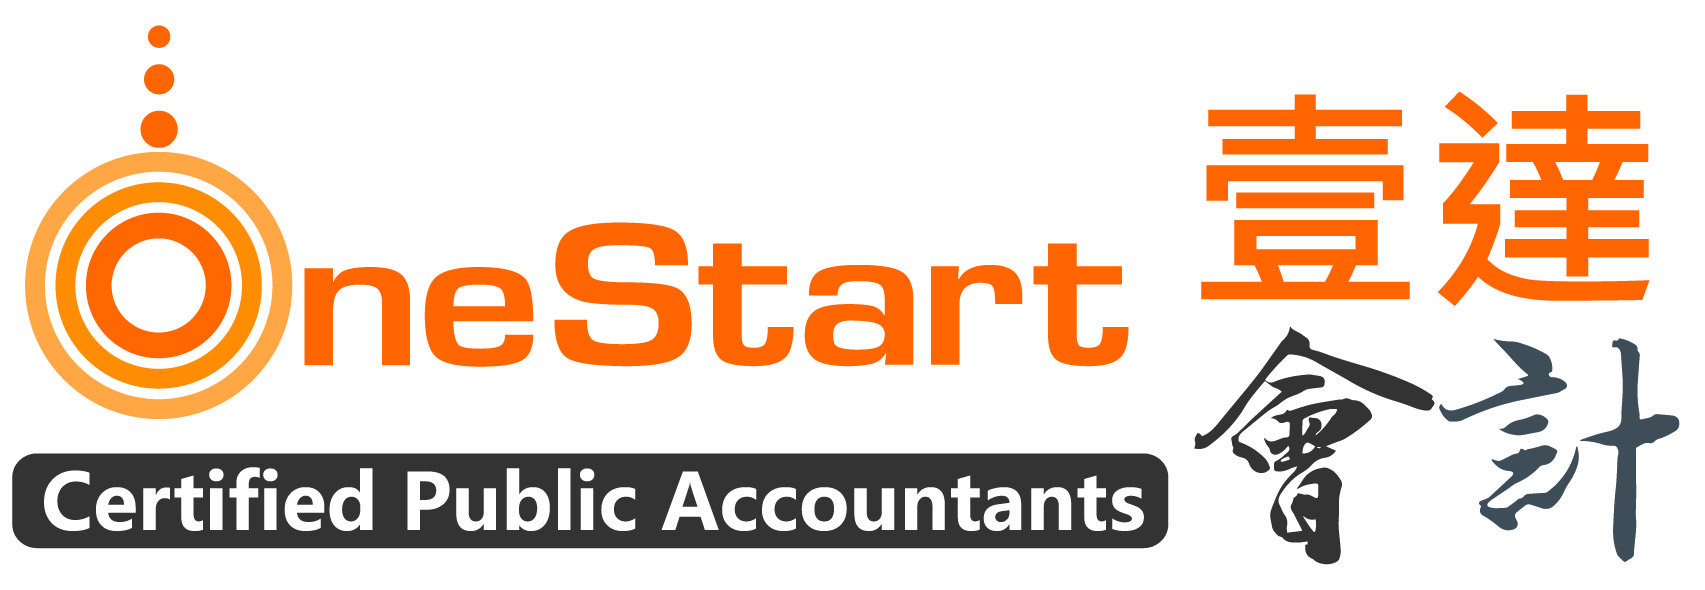 壹达会计 OneStart Certified Public Accountants